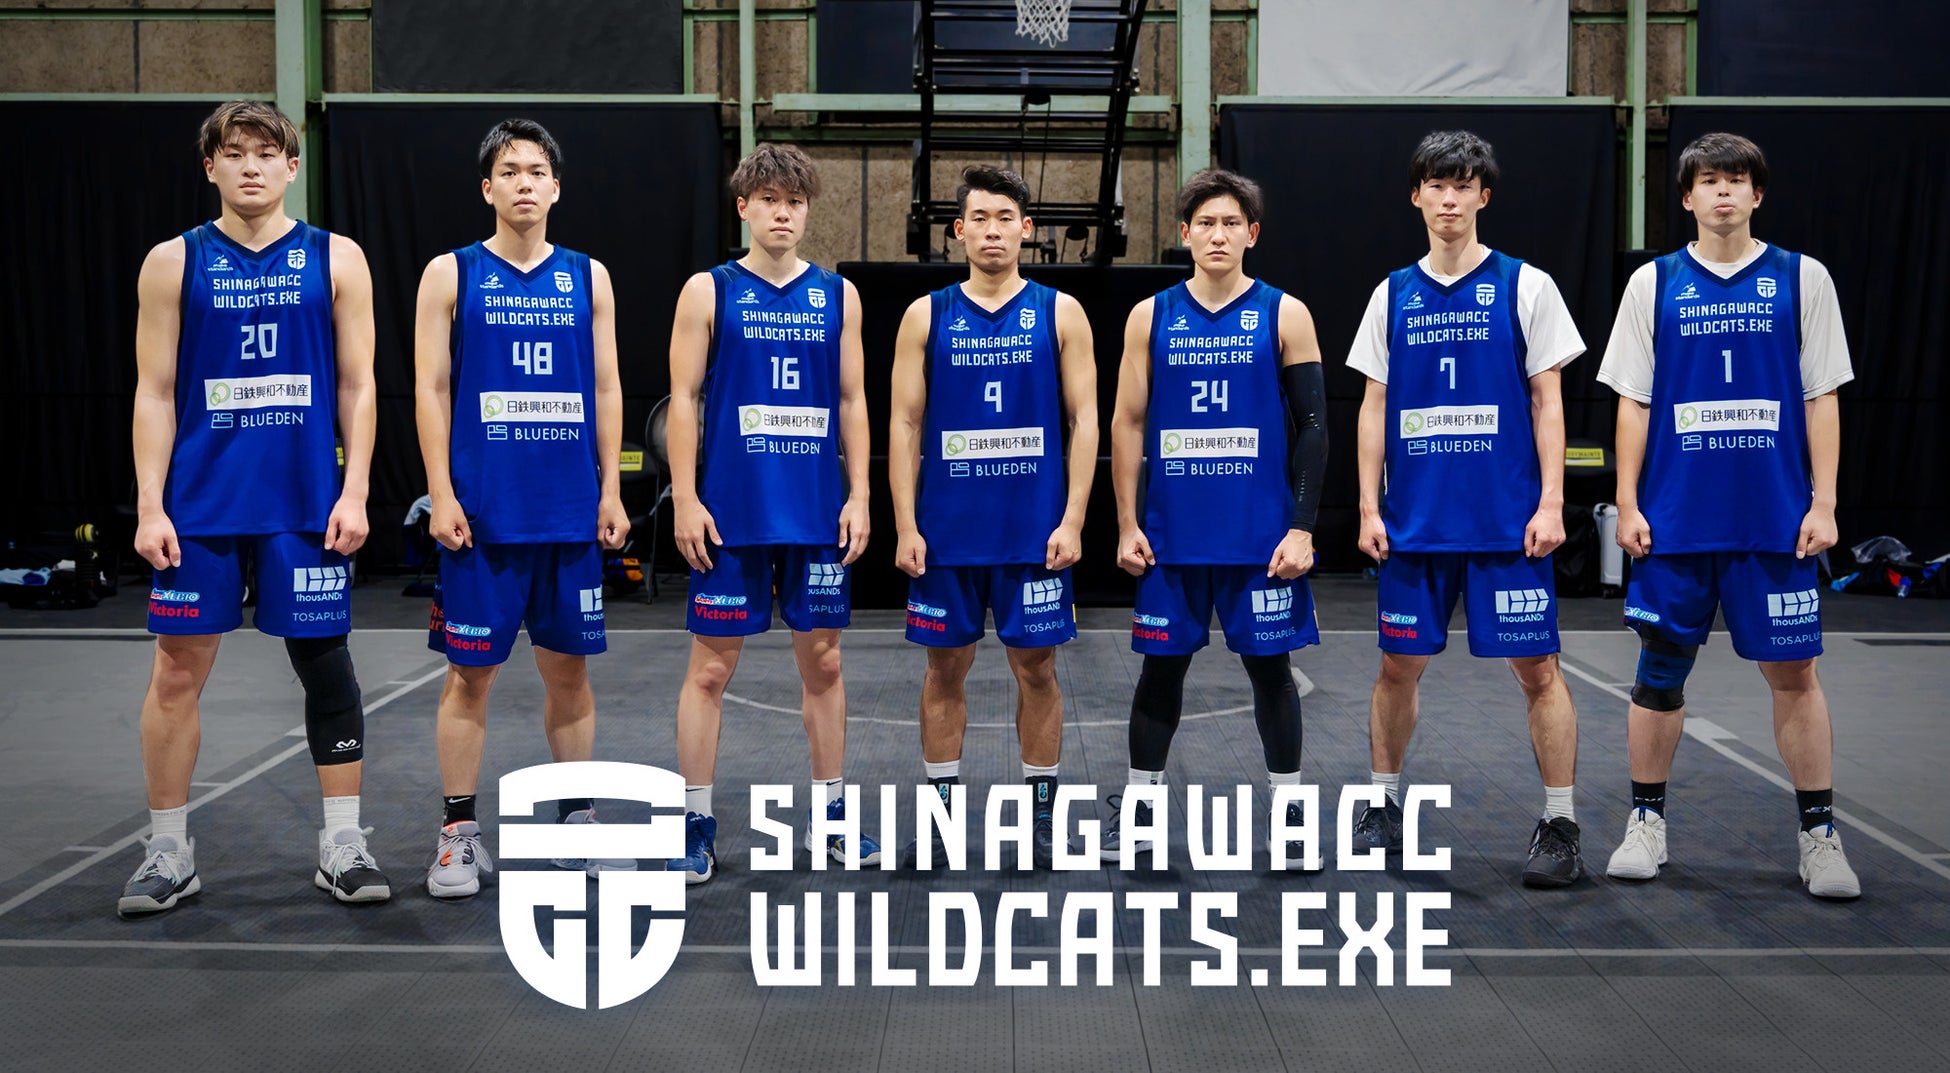 「B.LEAGUE」所属 プロバスケットボールクラブ「サンロッカーズ渋谷」セガサミーホールディングス株式会社の運営参画を発表